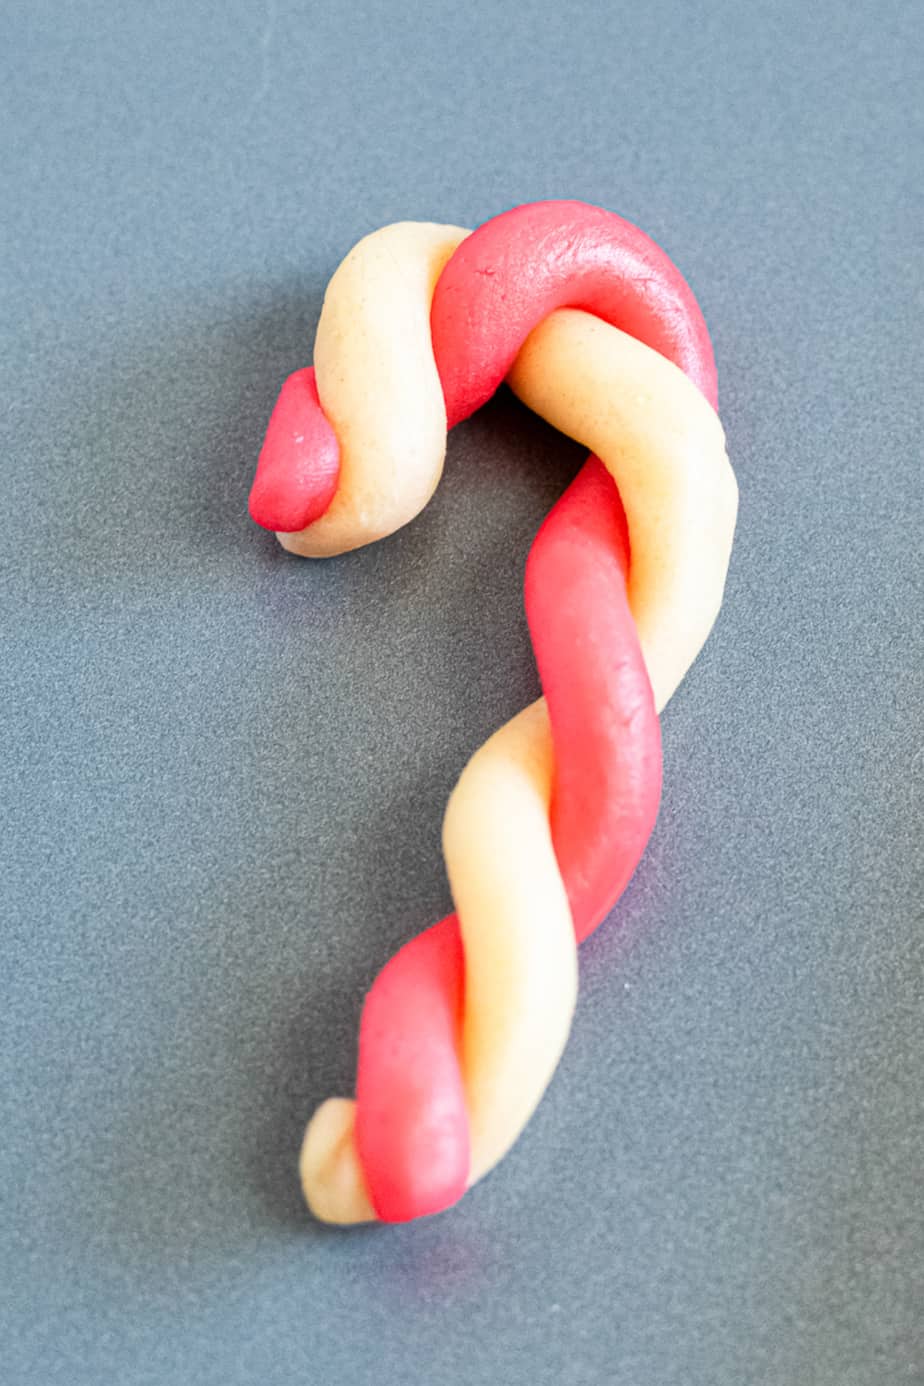 Twisted cookie dough shaped like a candy cane  close up